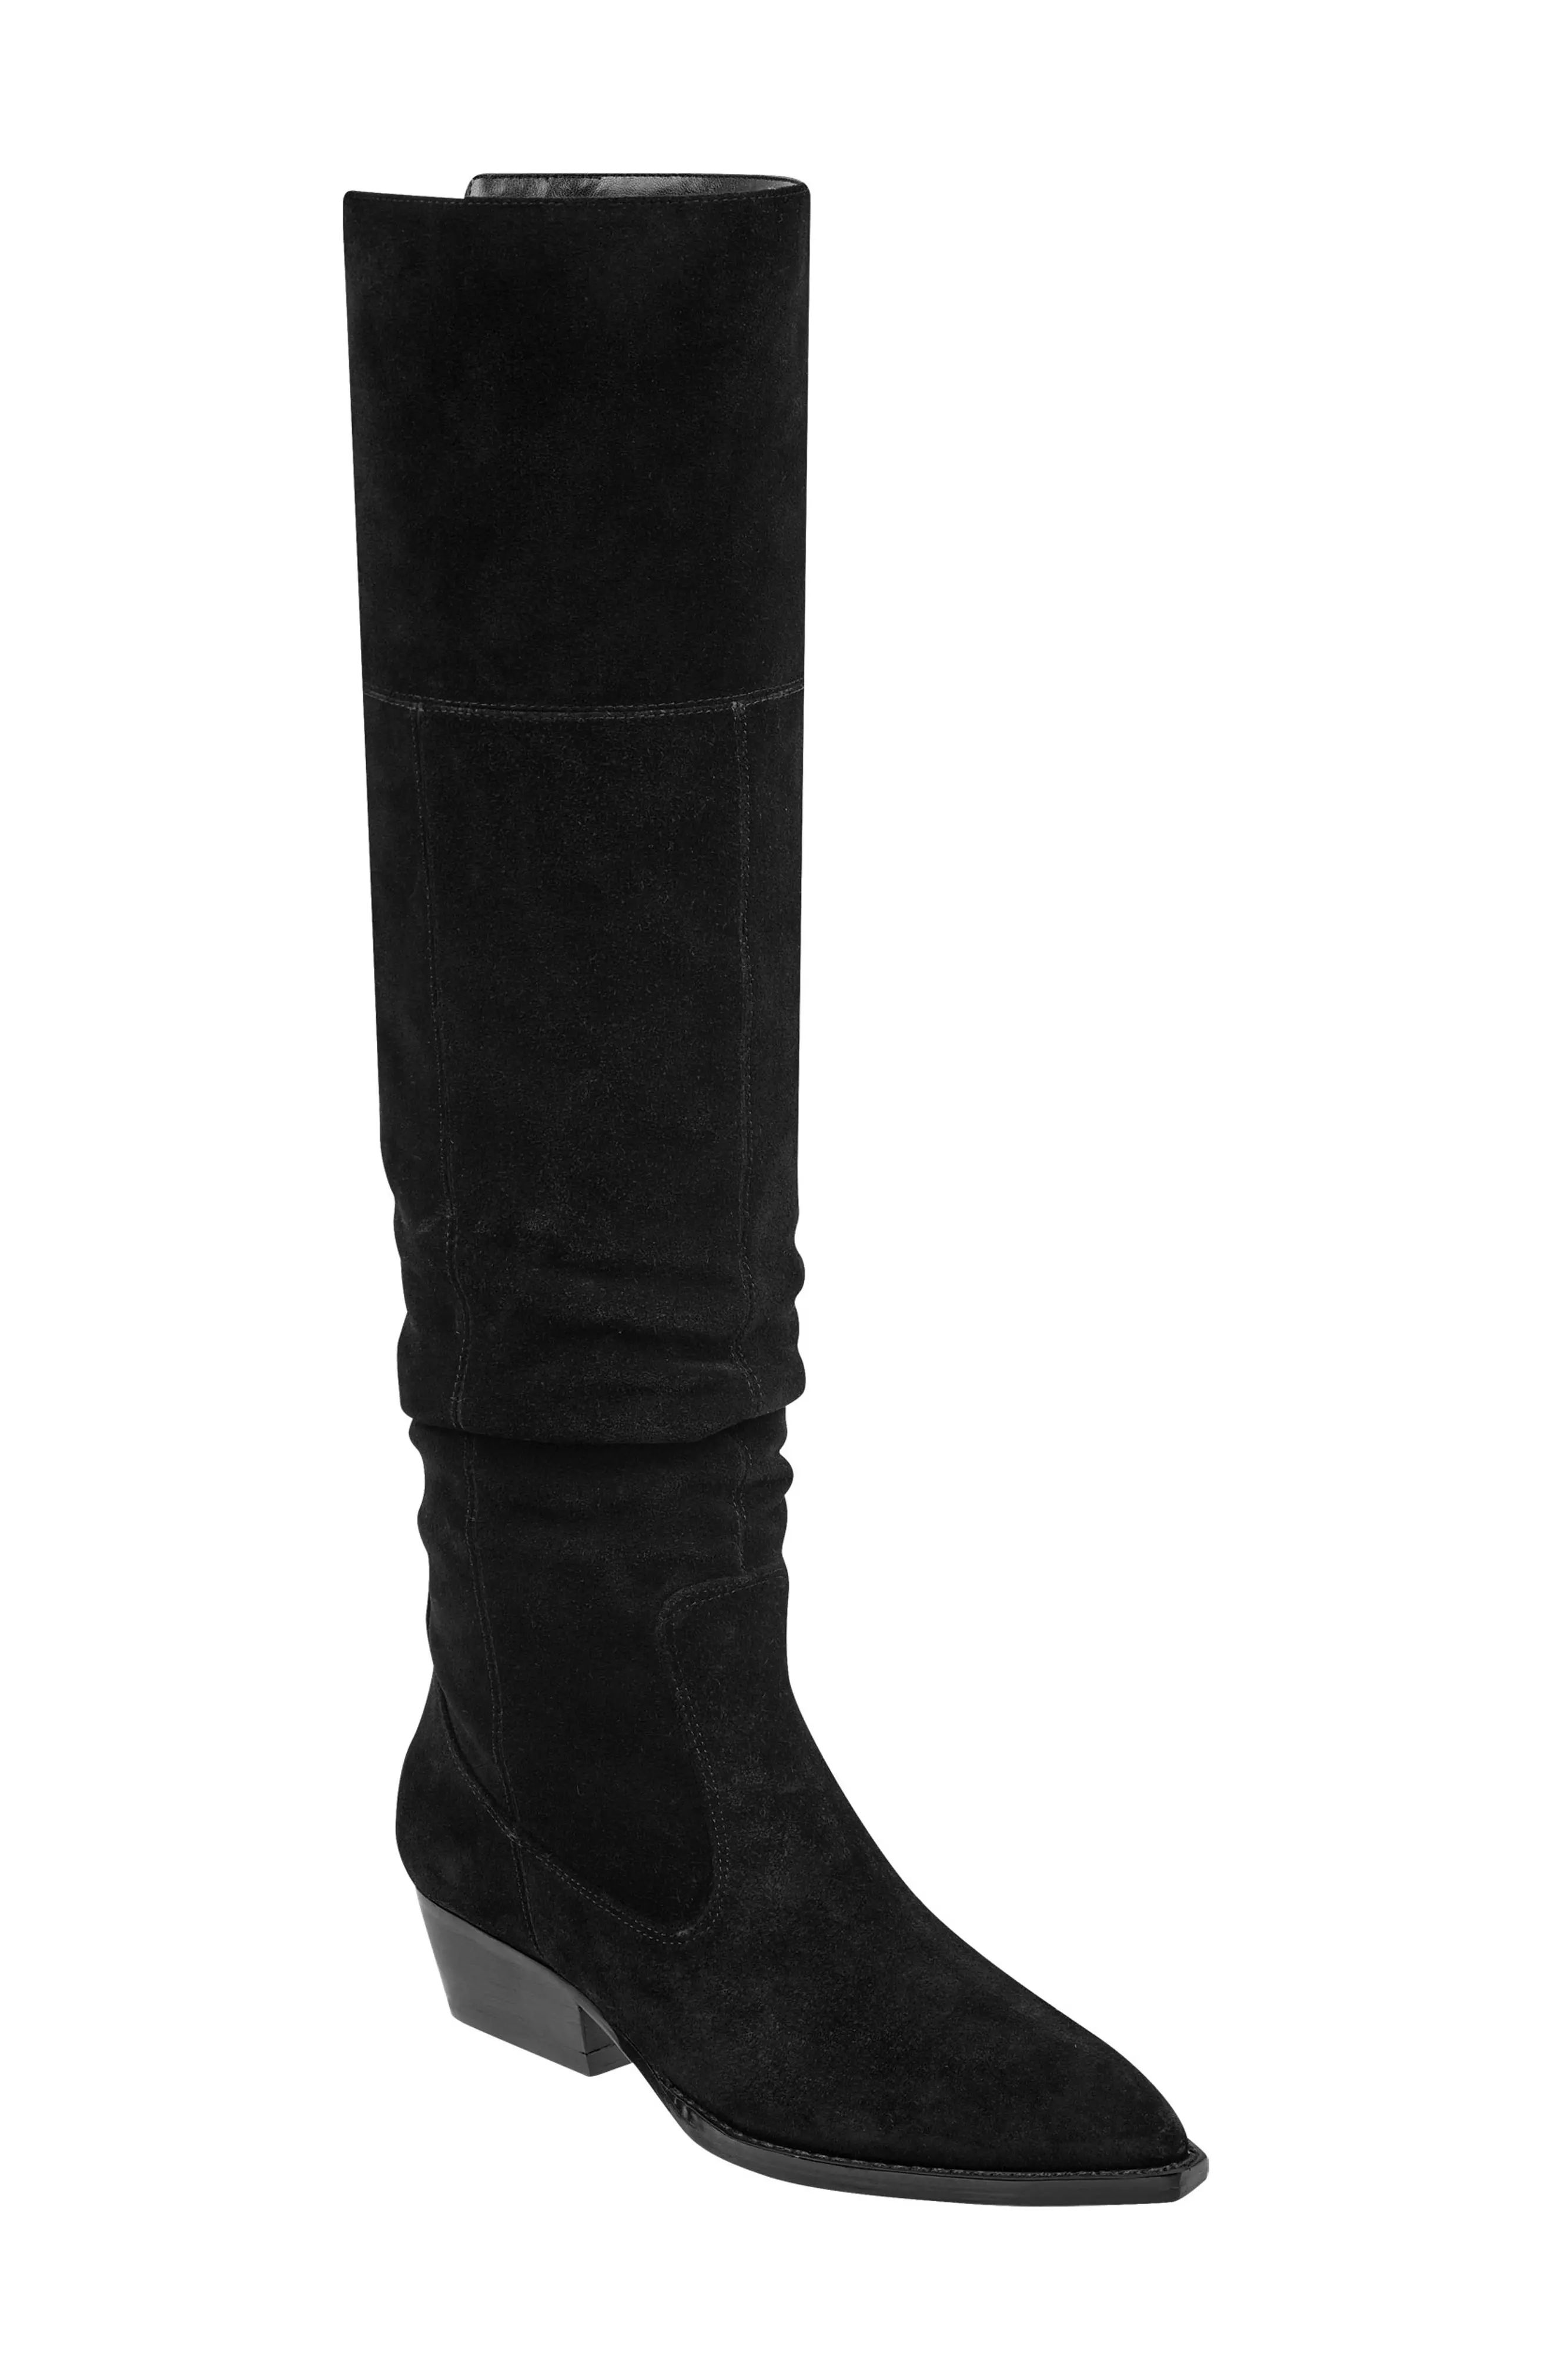 Women's Marc Fisher Ltd Ocea Over The Knee Boot, Size 10 M - Black | Nordstrom